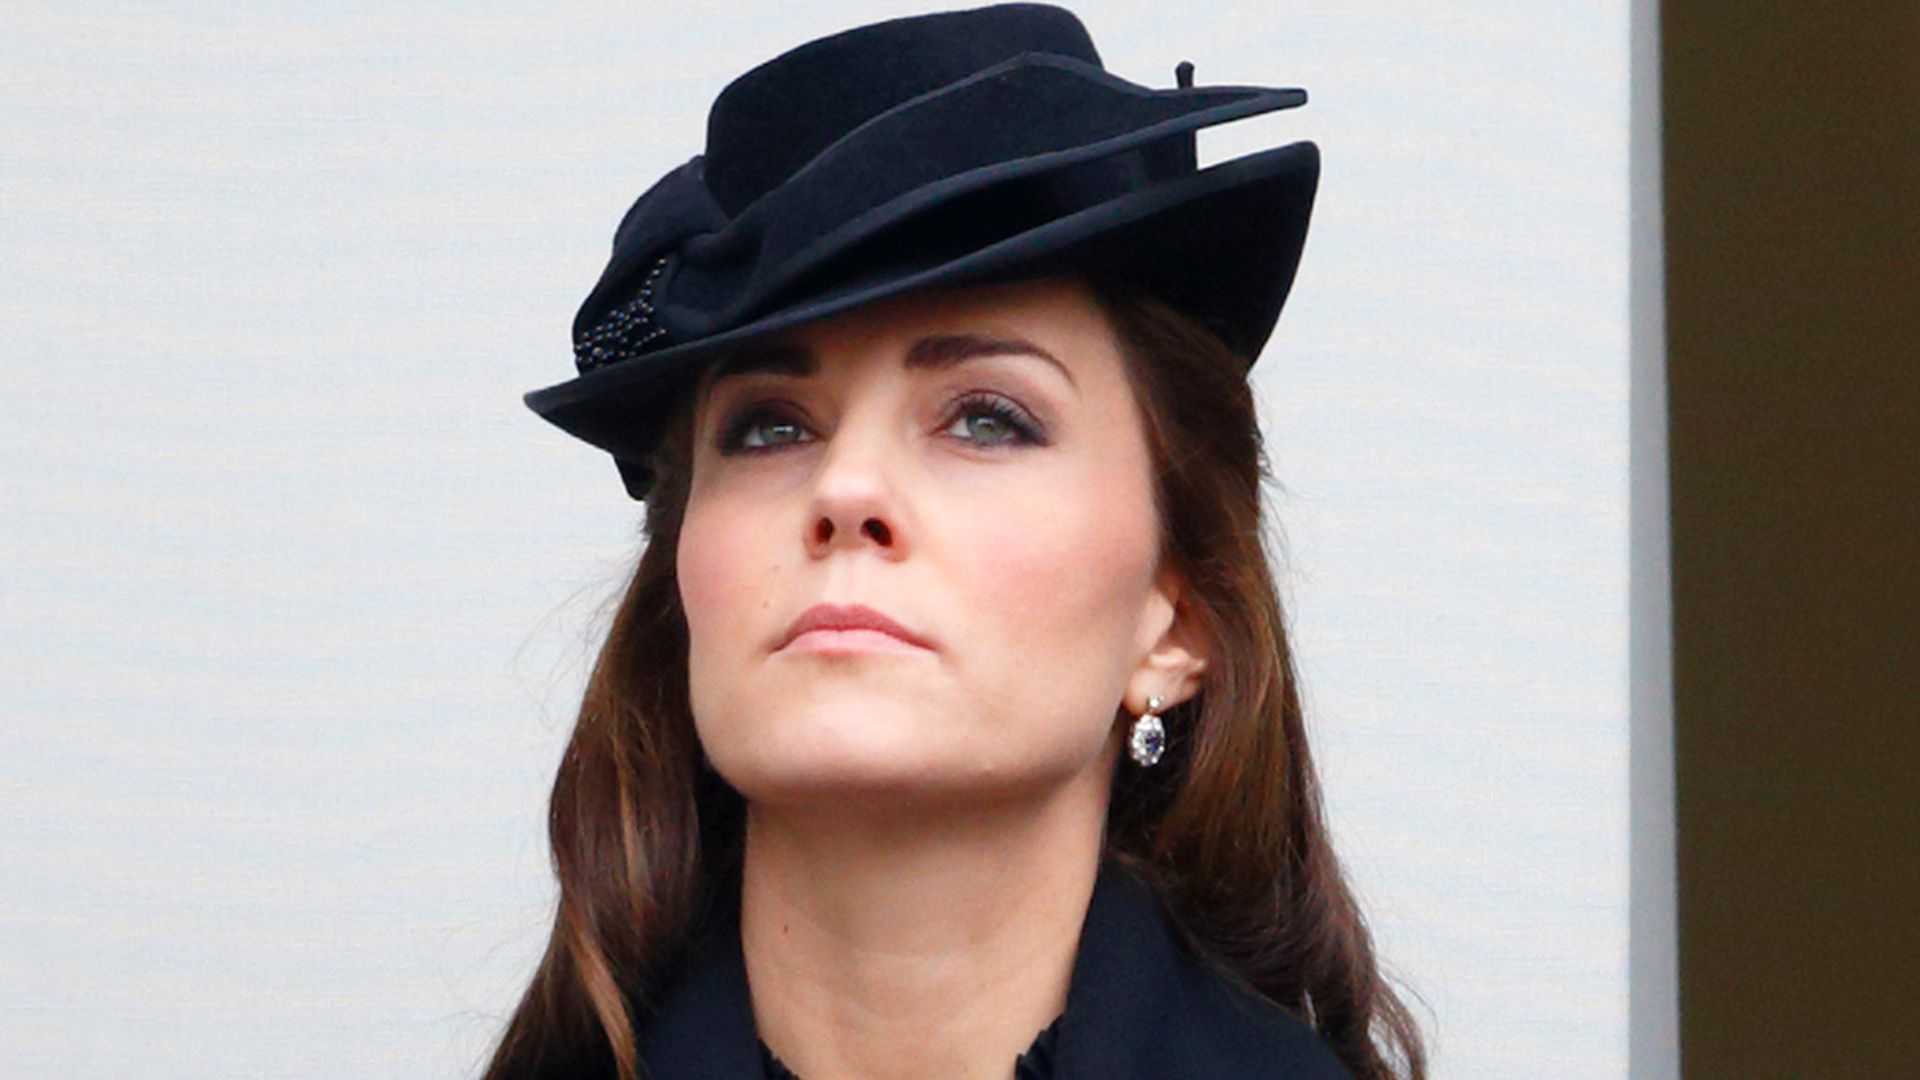 Kate Middleton Personality